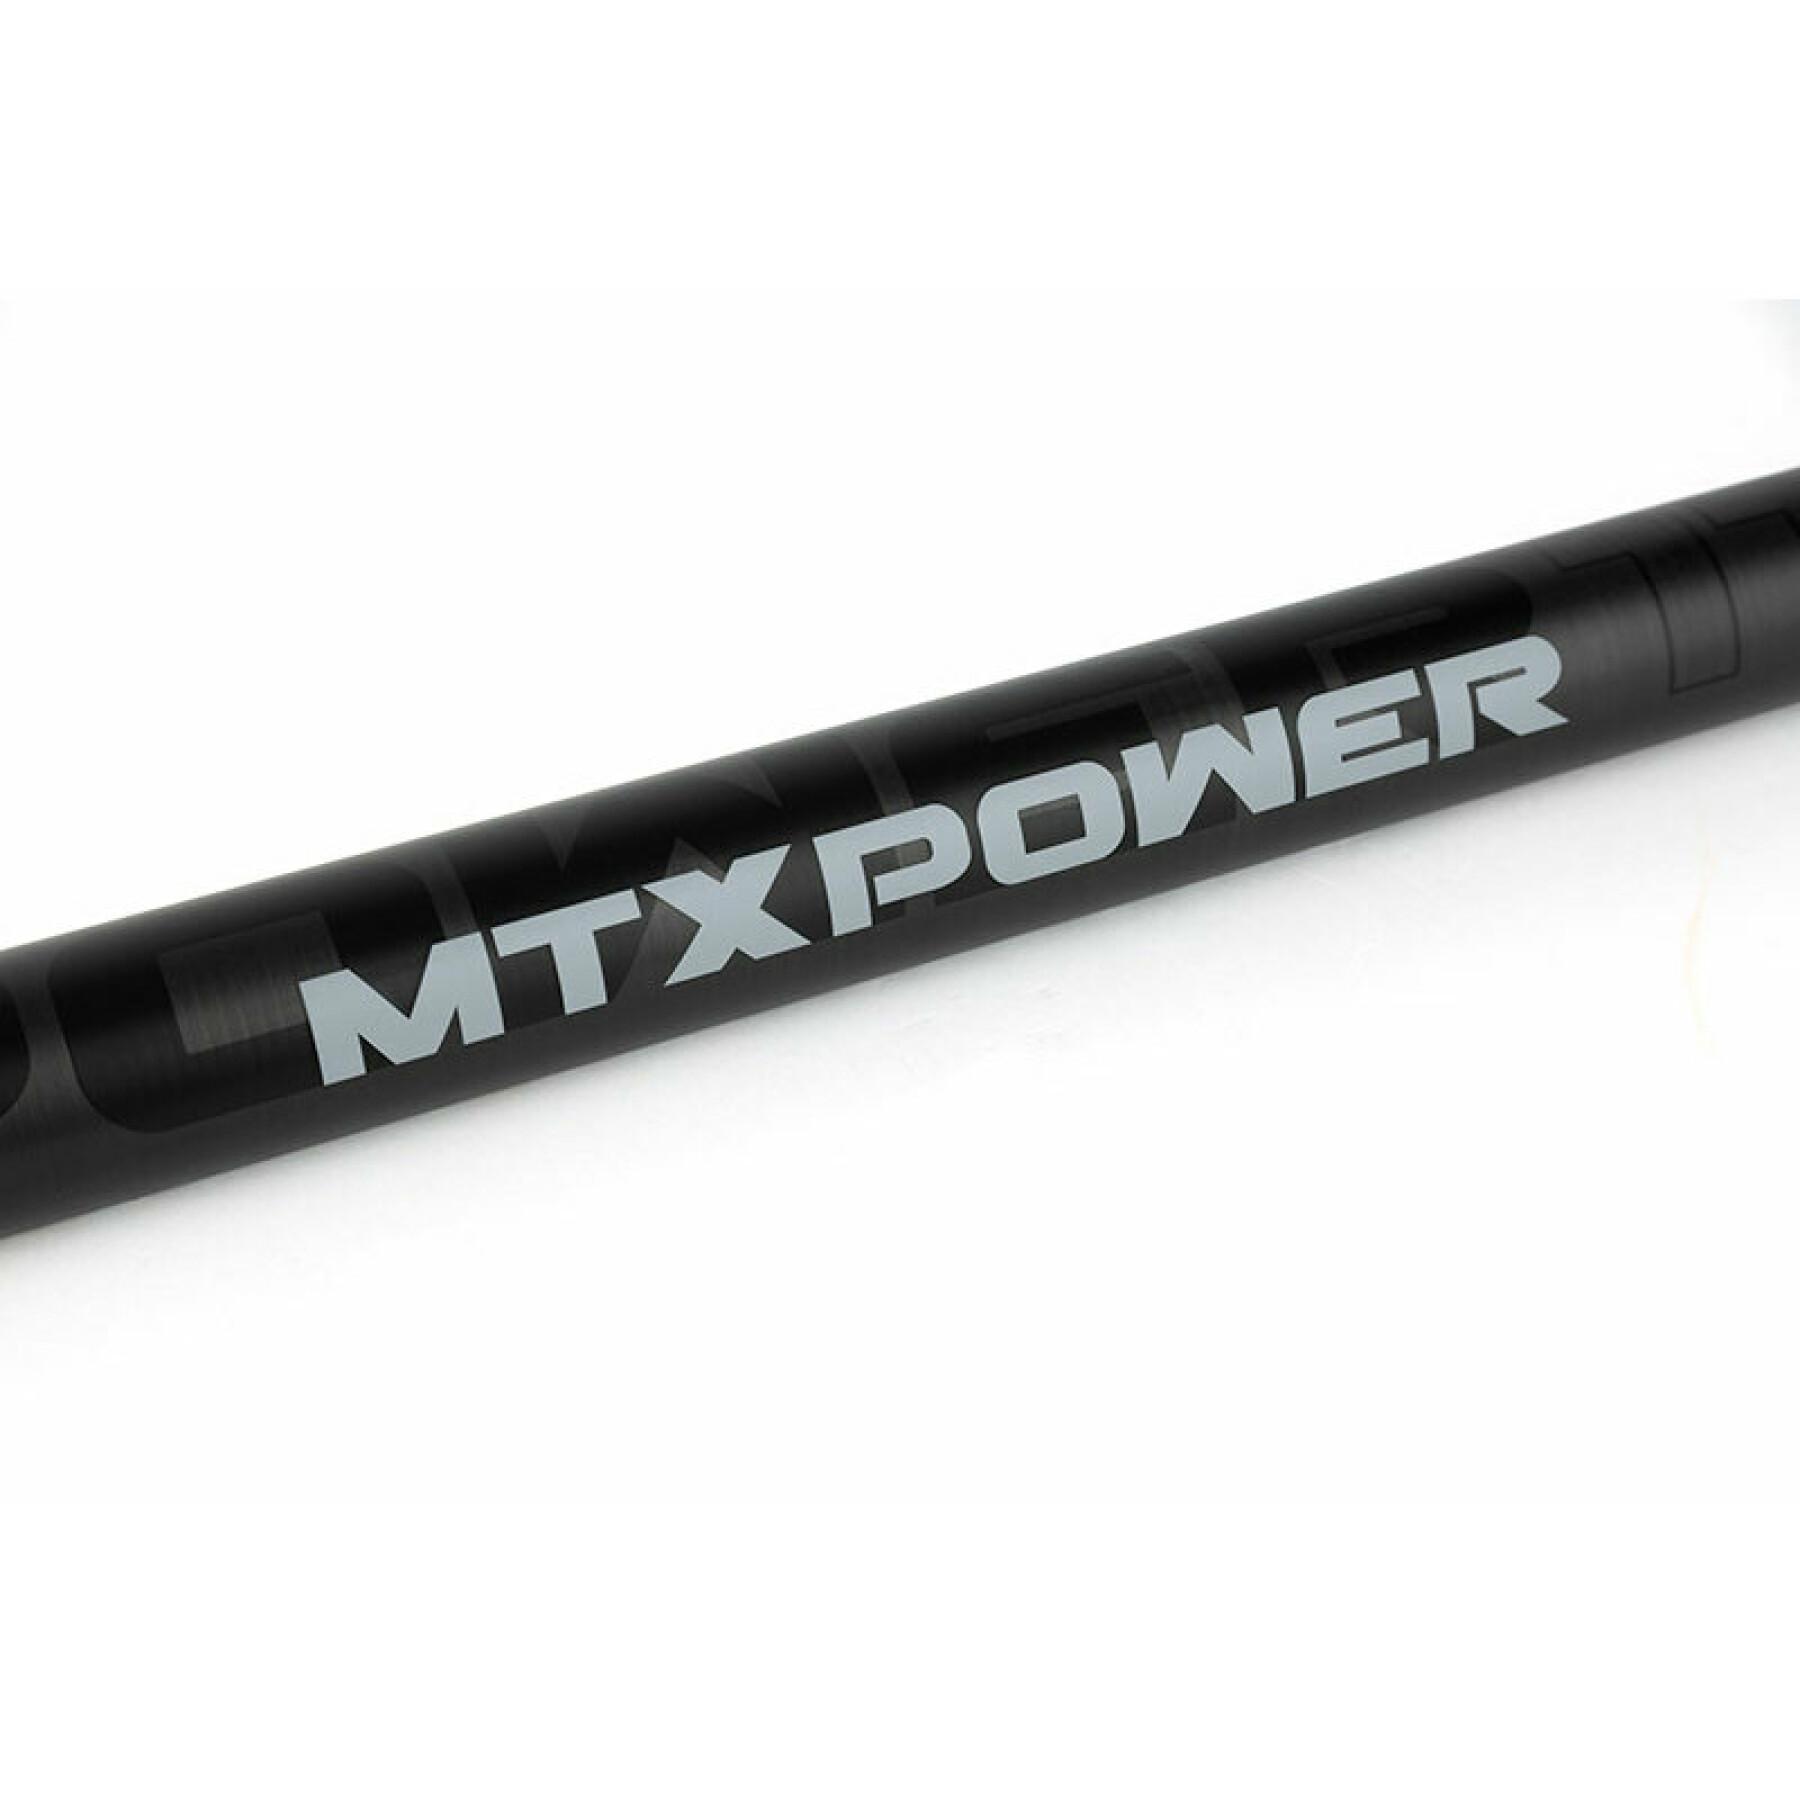 Mtx power margin pool Matrix 11m